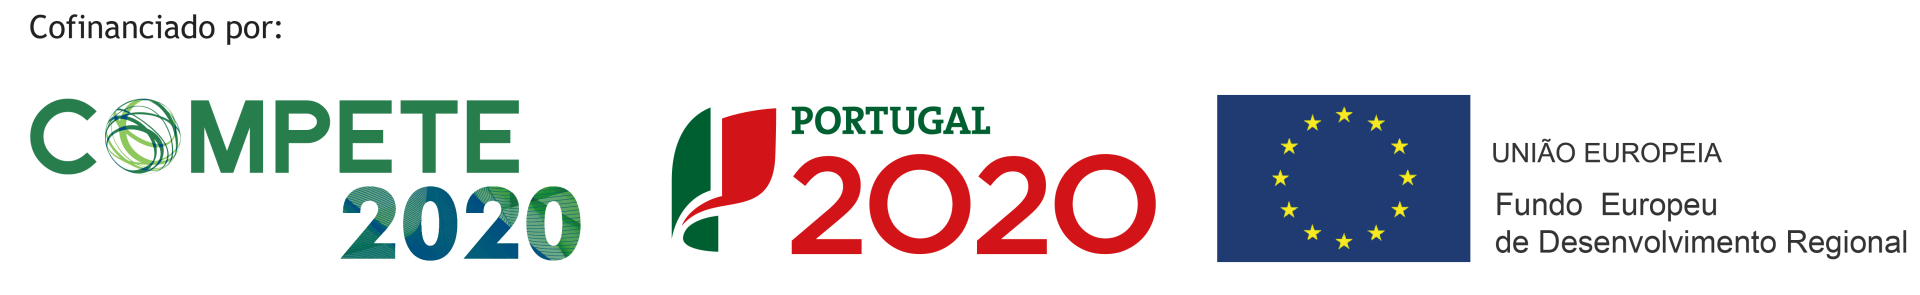 Programa 2020